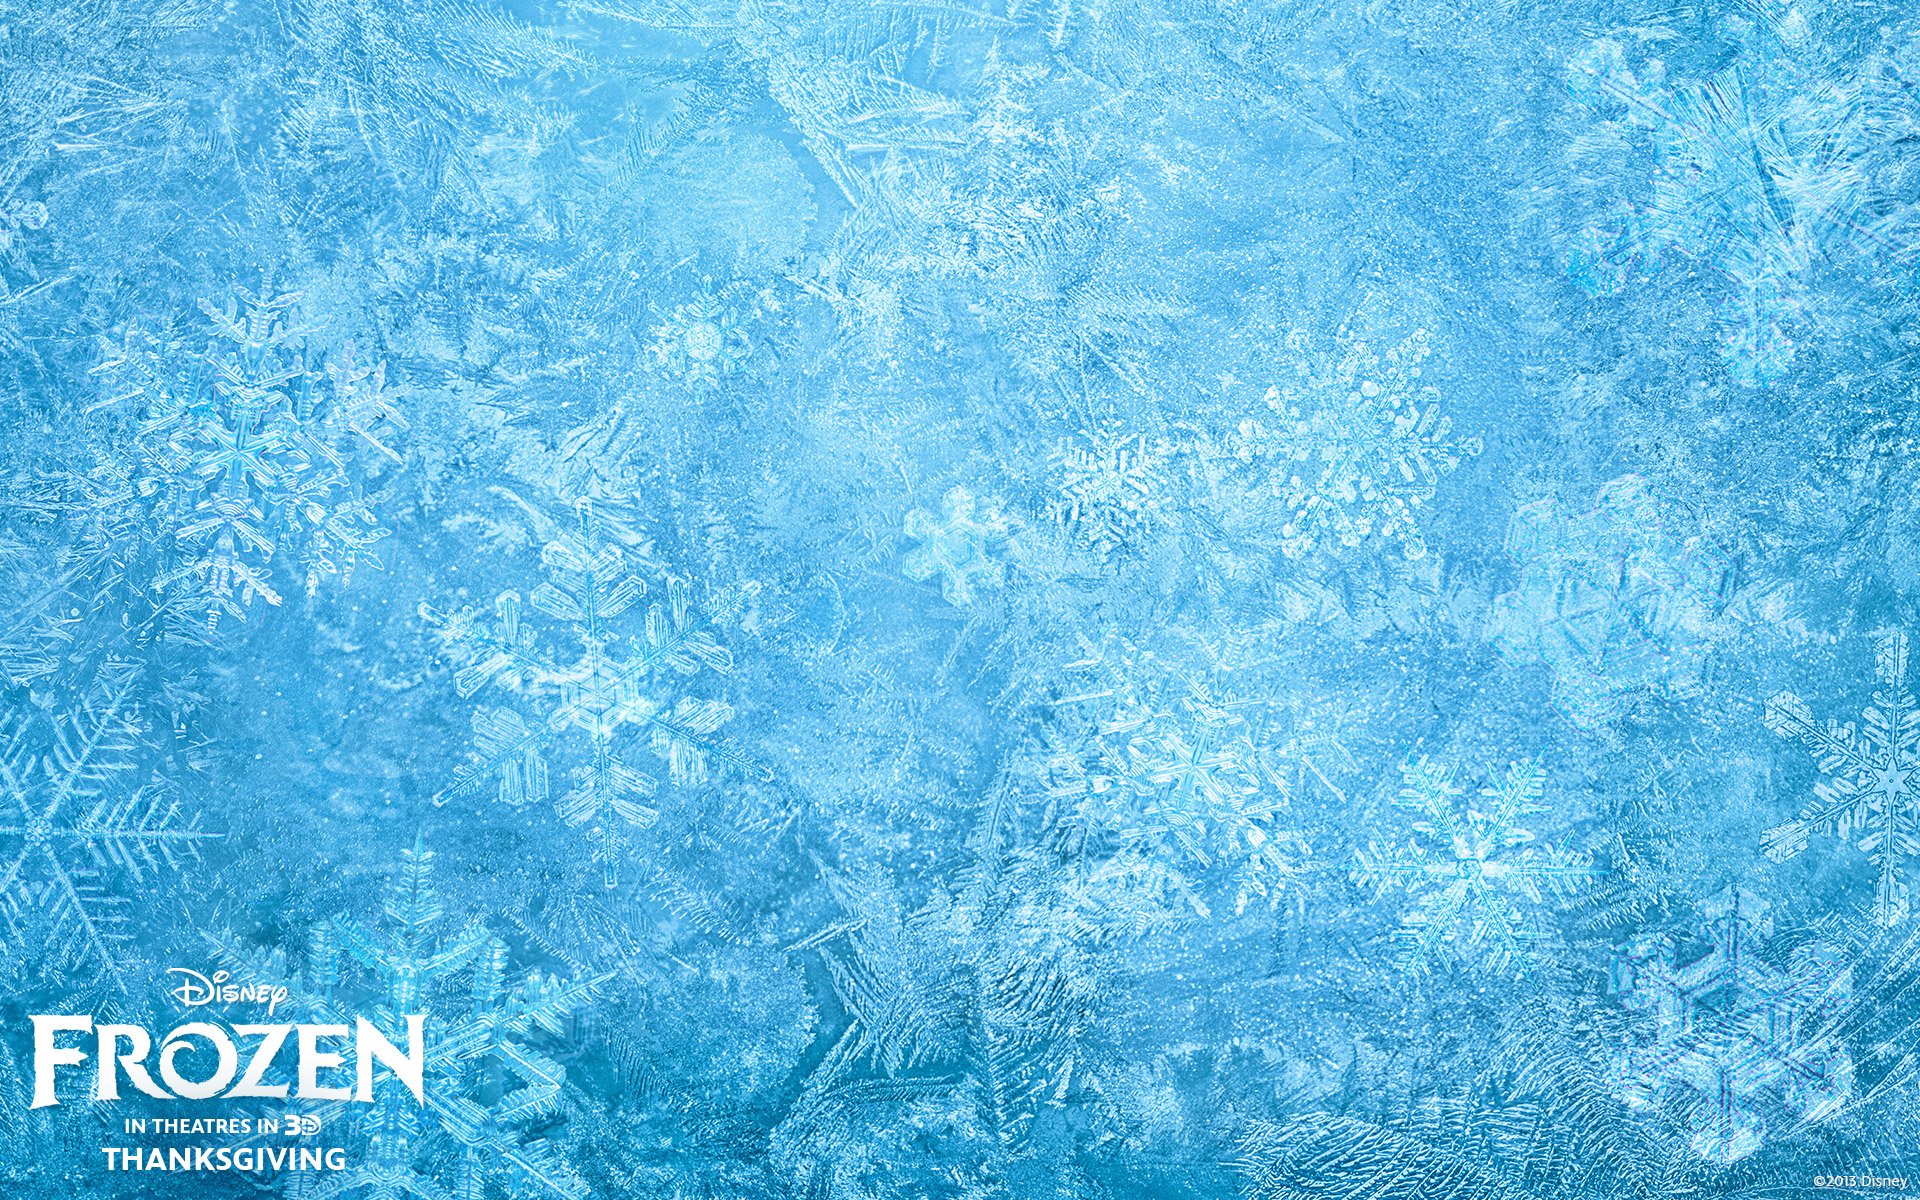 ice background image from Disneys animated movie Frozen Disneys